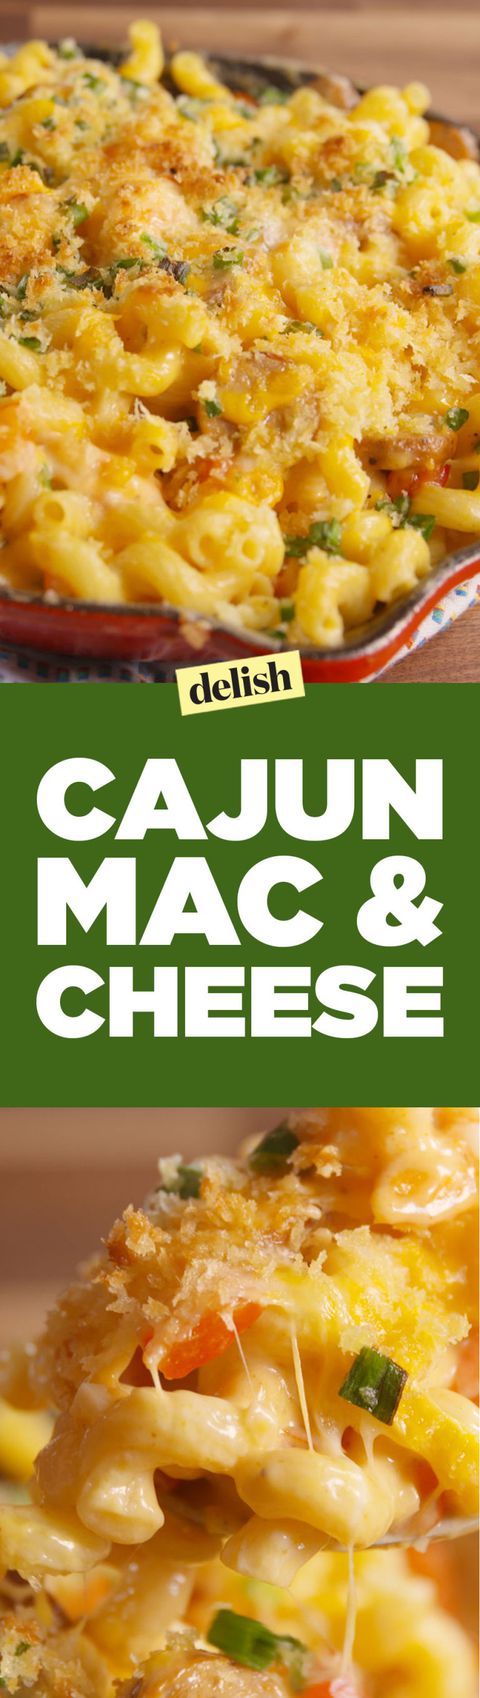 Cajun Mac & Cheese Pinterest